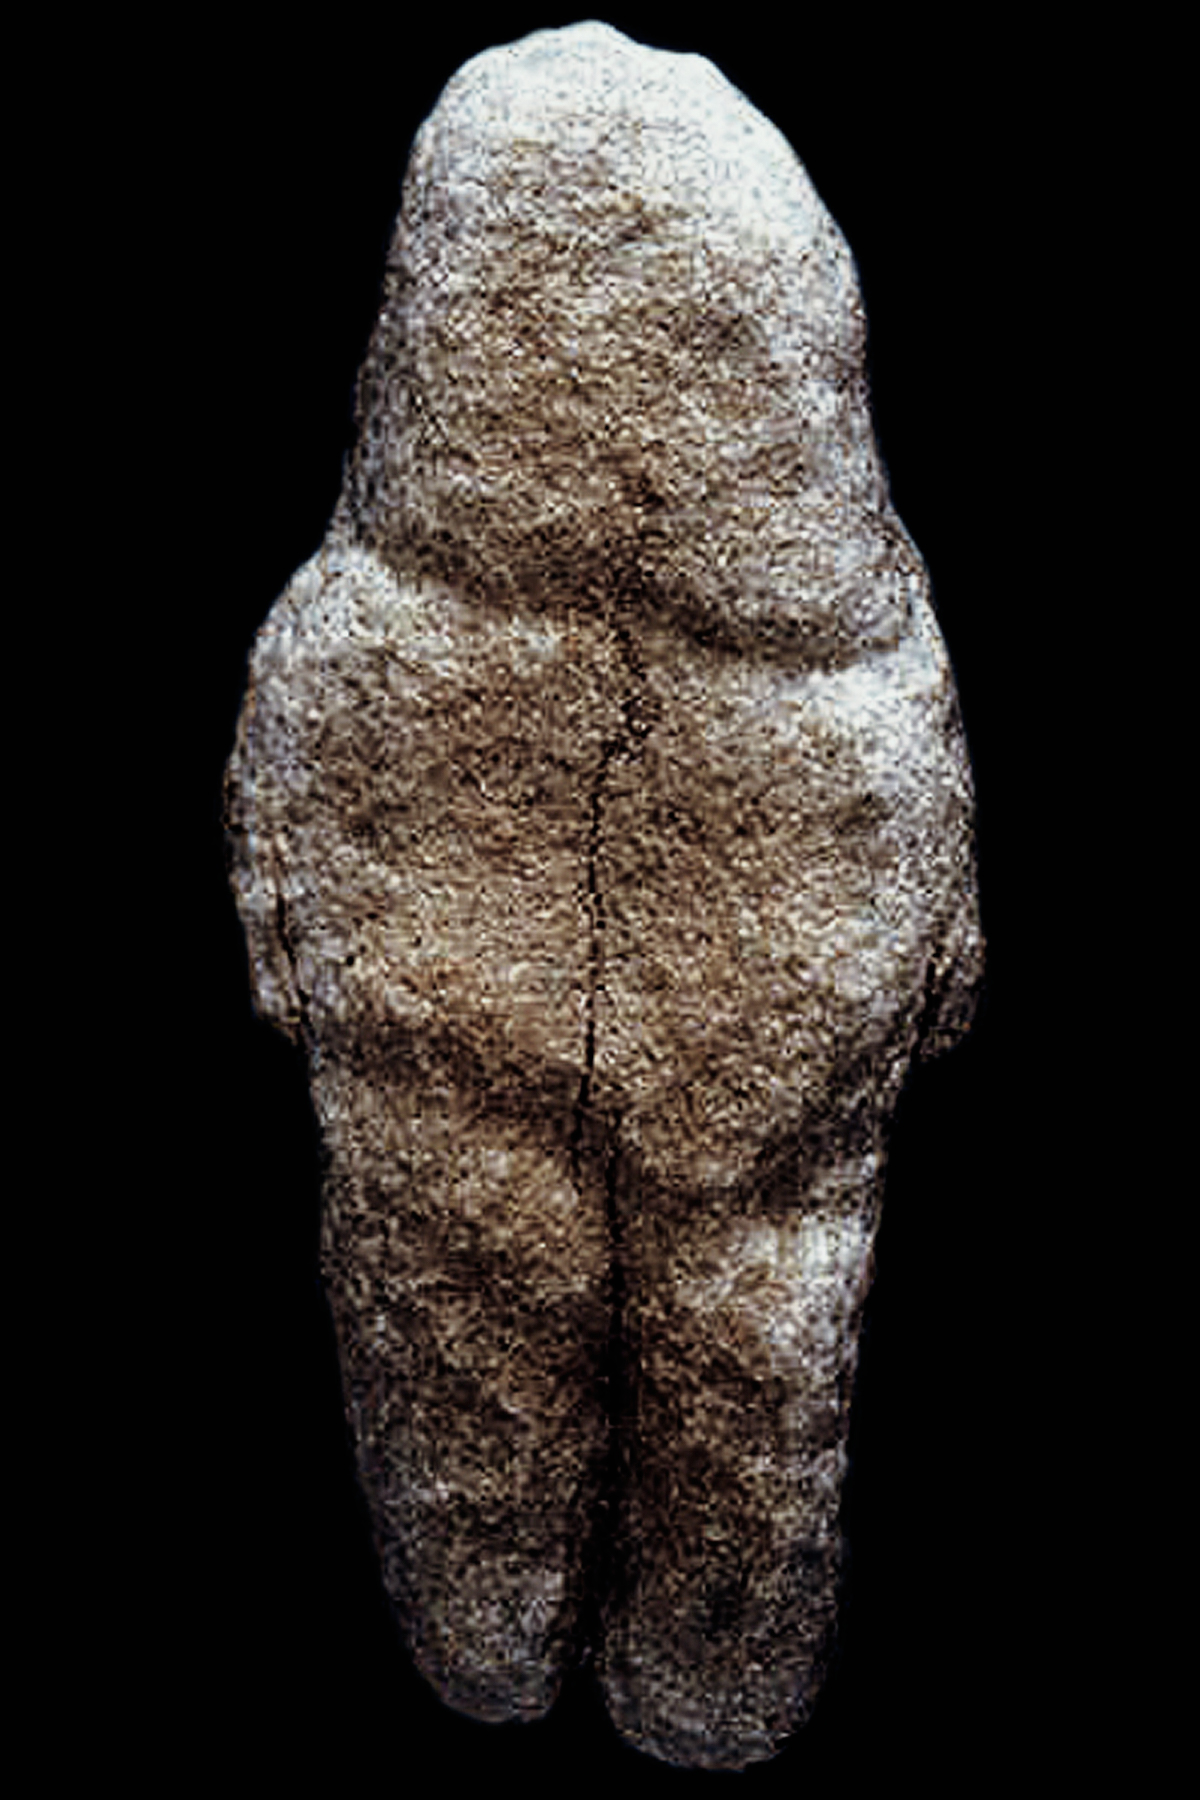 Tan-Tan - The oldest known human representation?